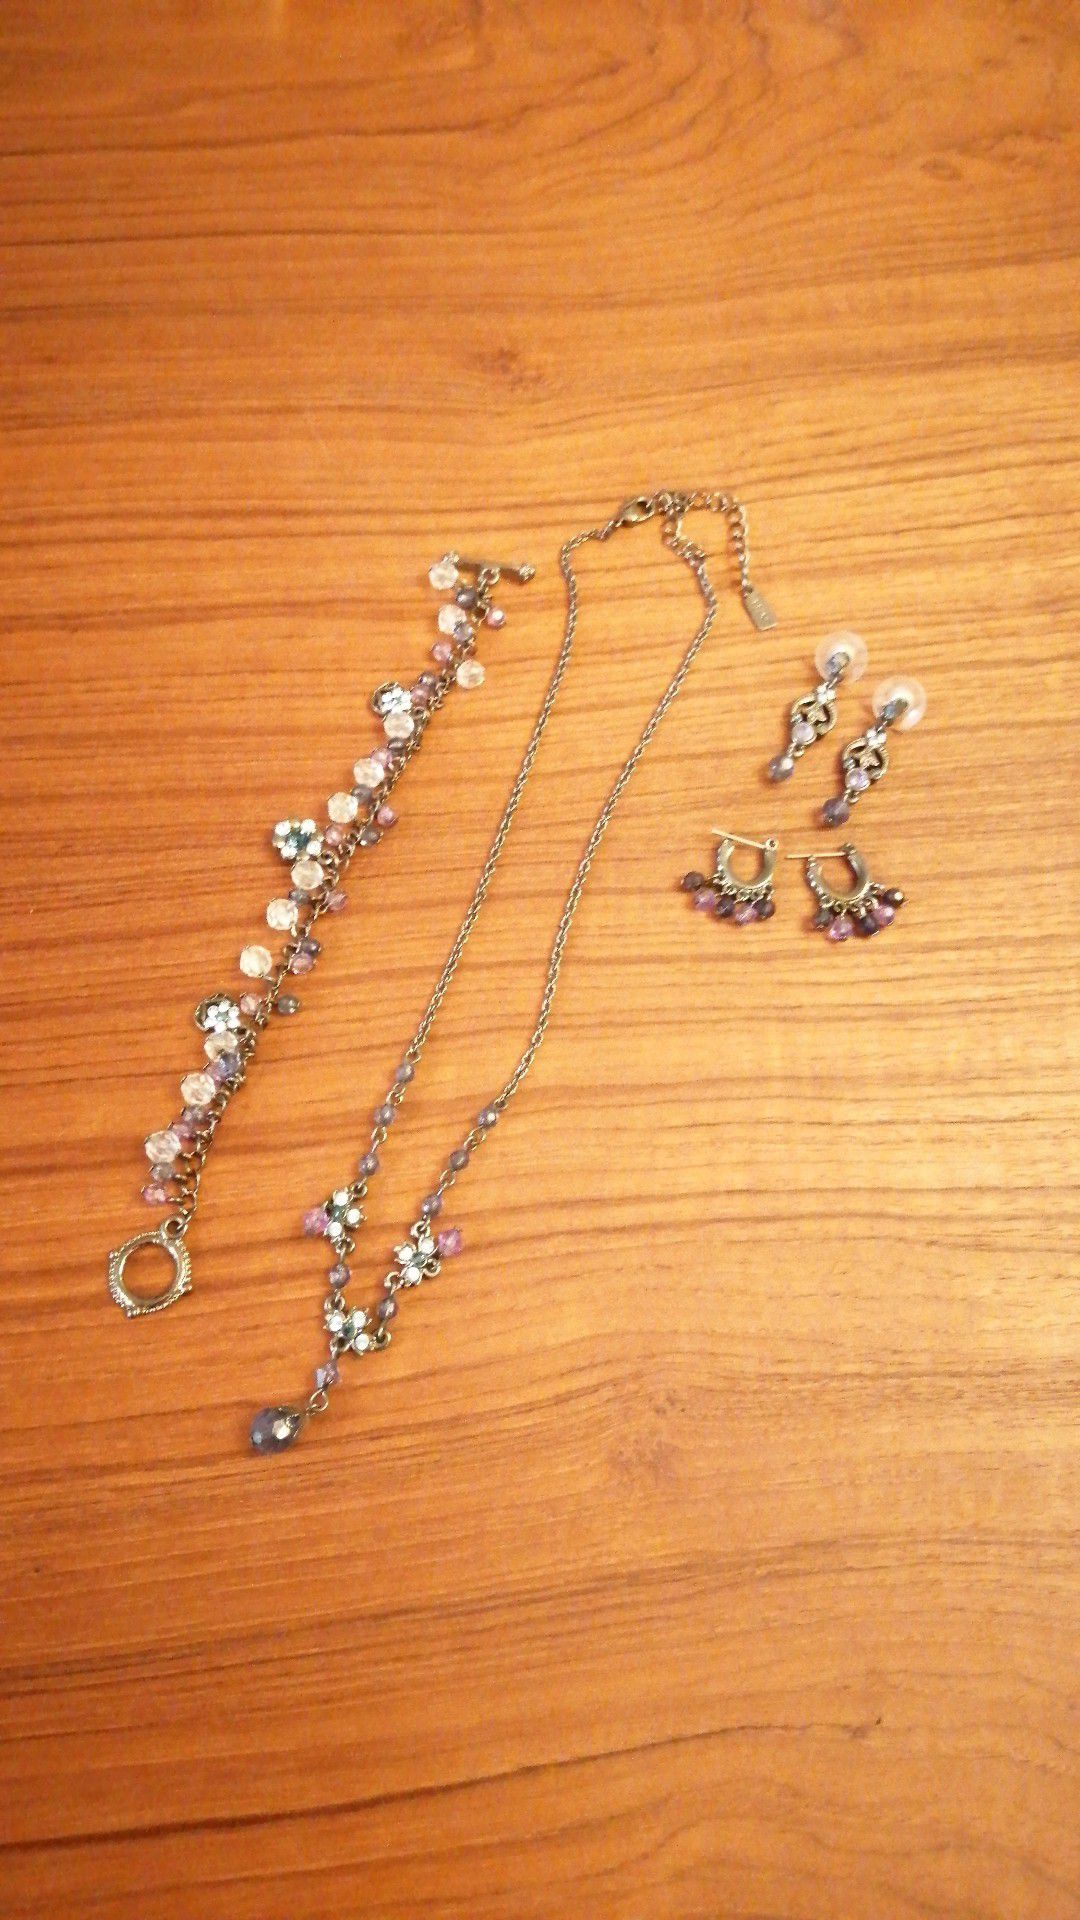 Gorgeous necklace / bracelet / earrings set from 1928